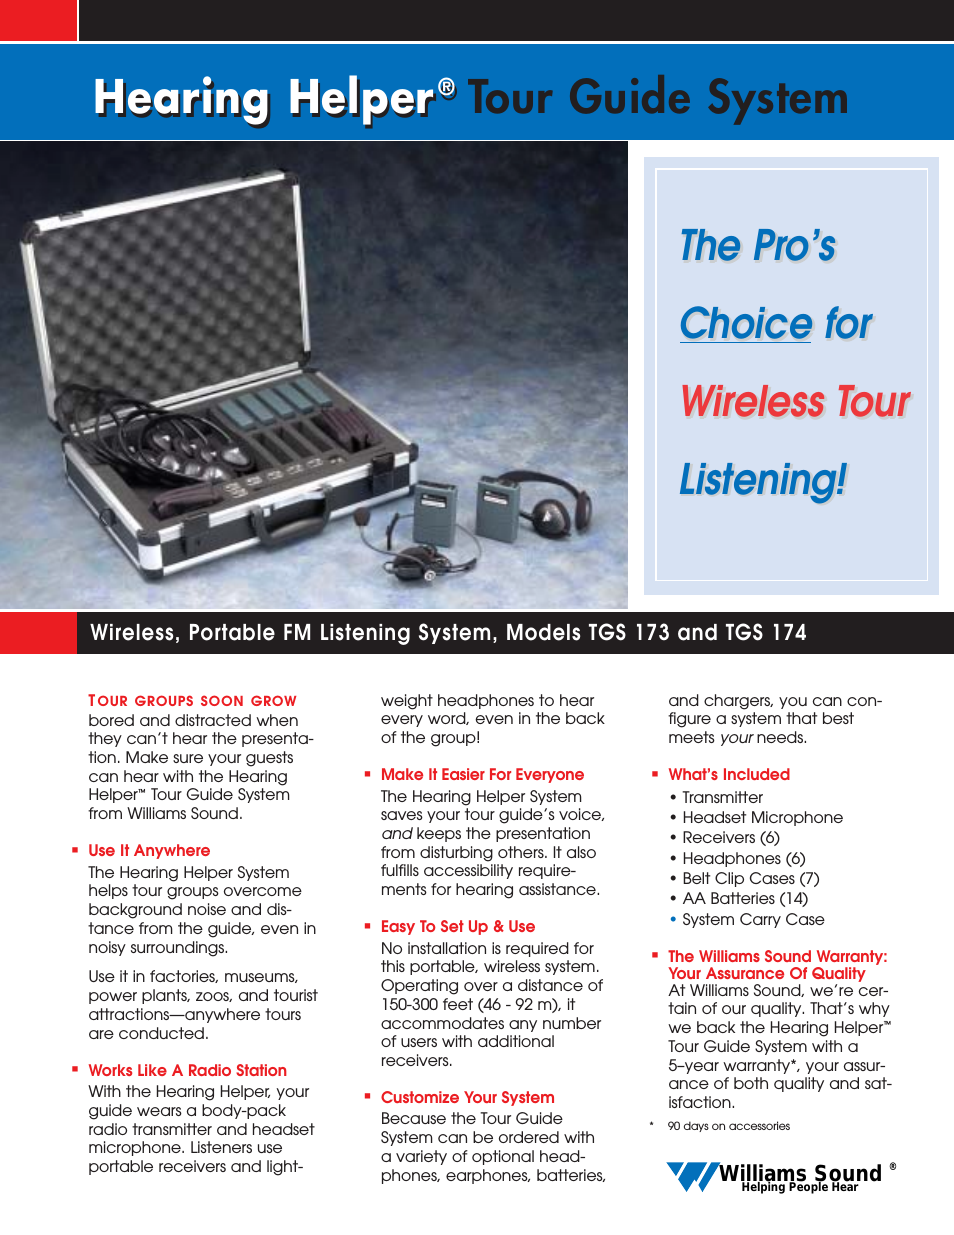 Portable FM Listening System TGS 174